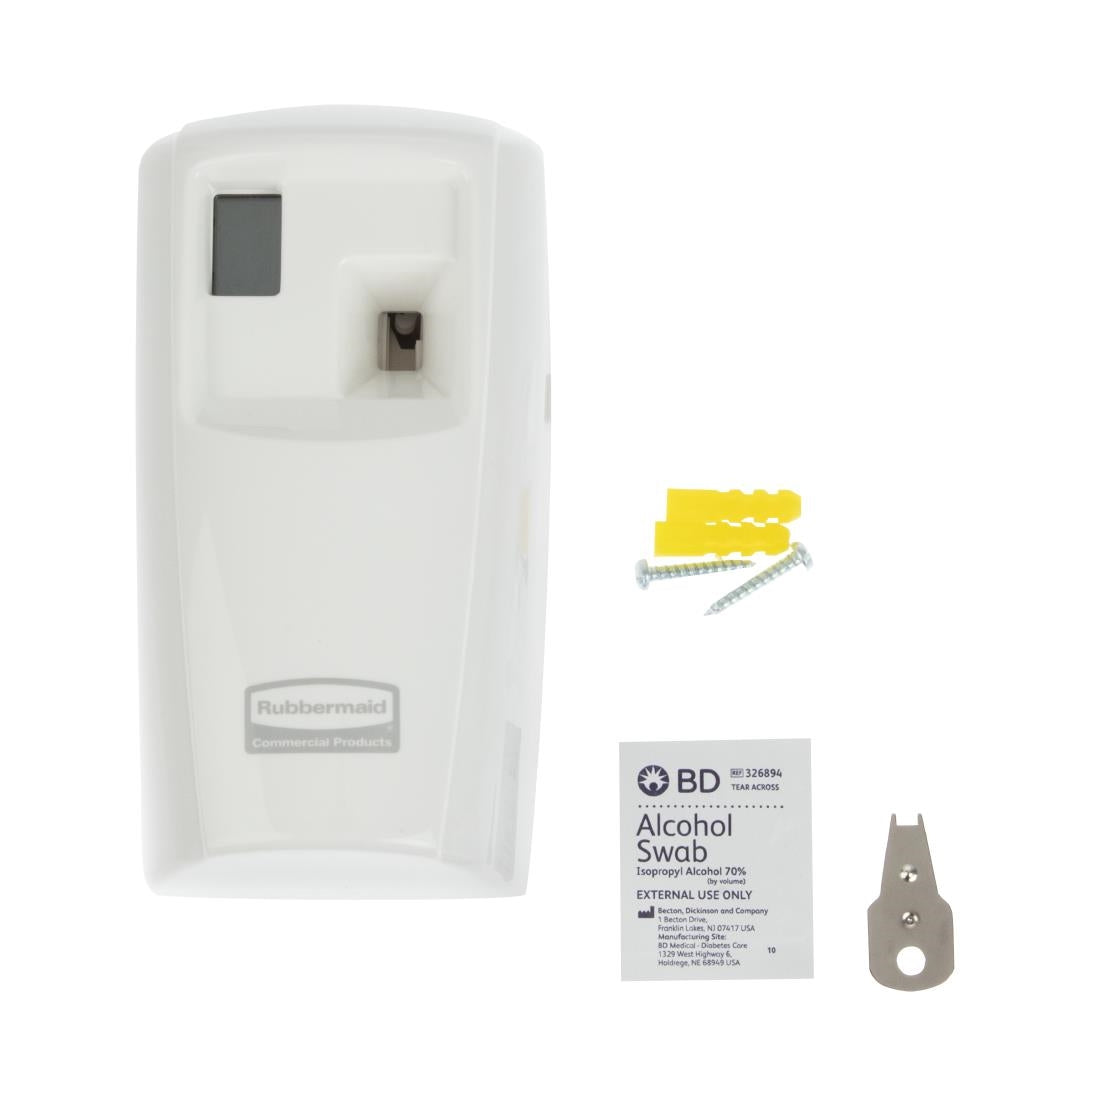 GH060 Rubbermaid Microburst Automatic Air Freshener Dispenser